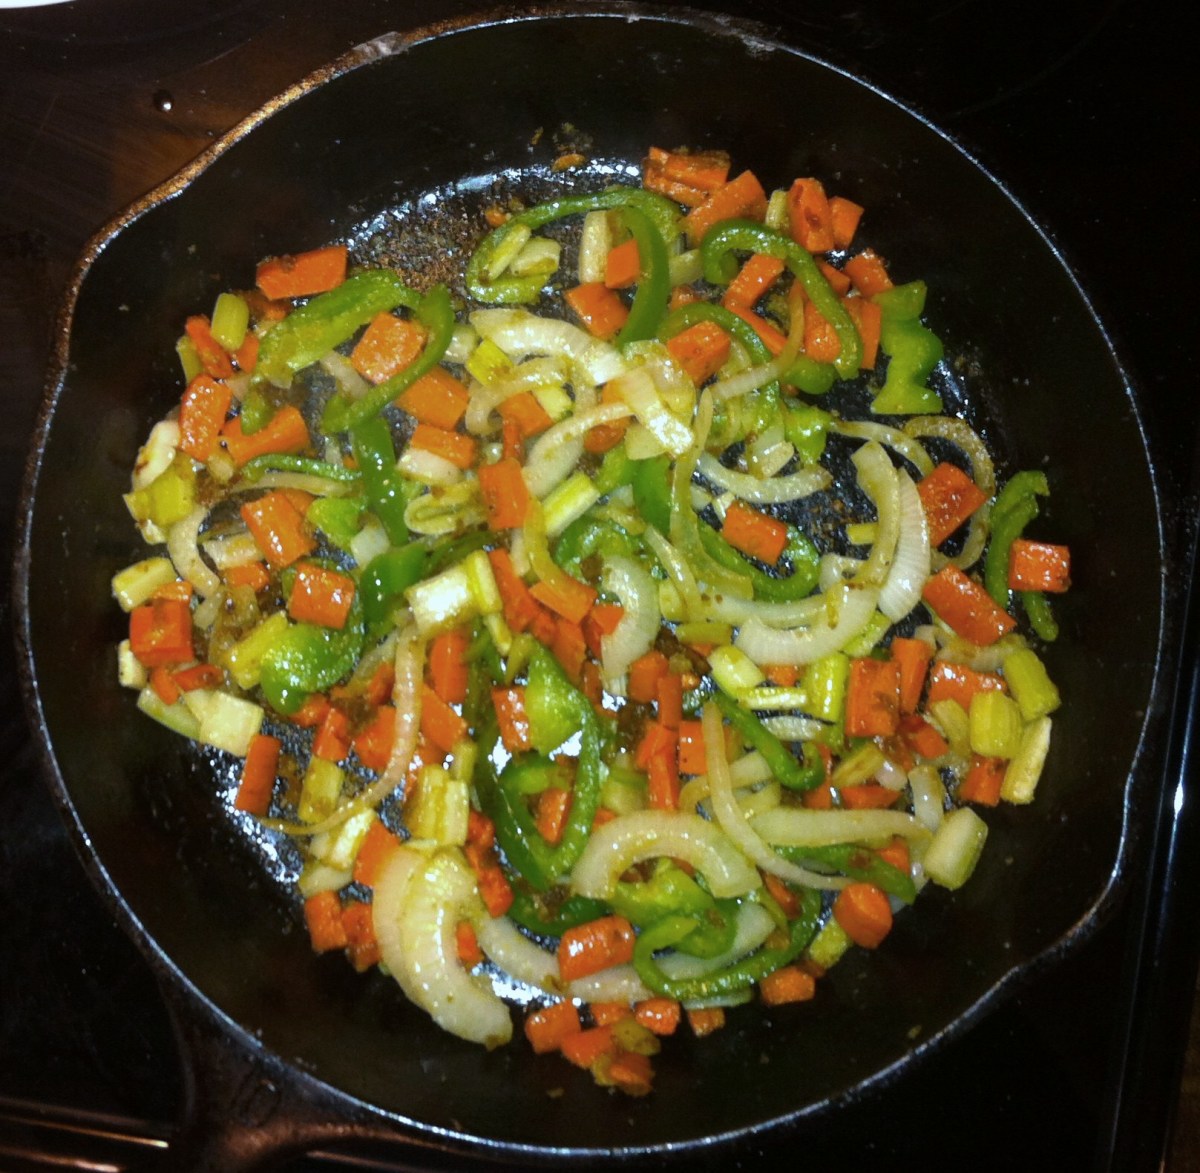 Saute Veggies in the Same Pan, Add Liquid